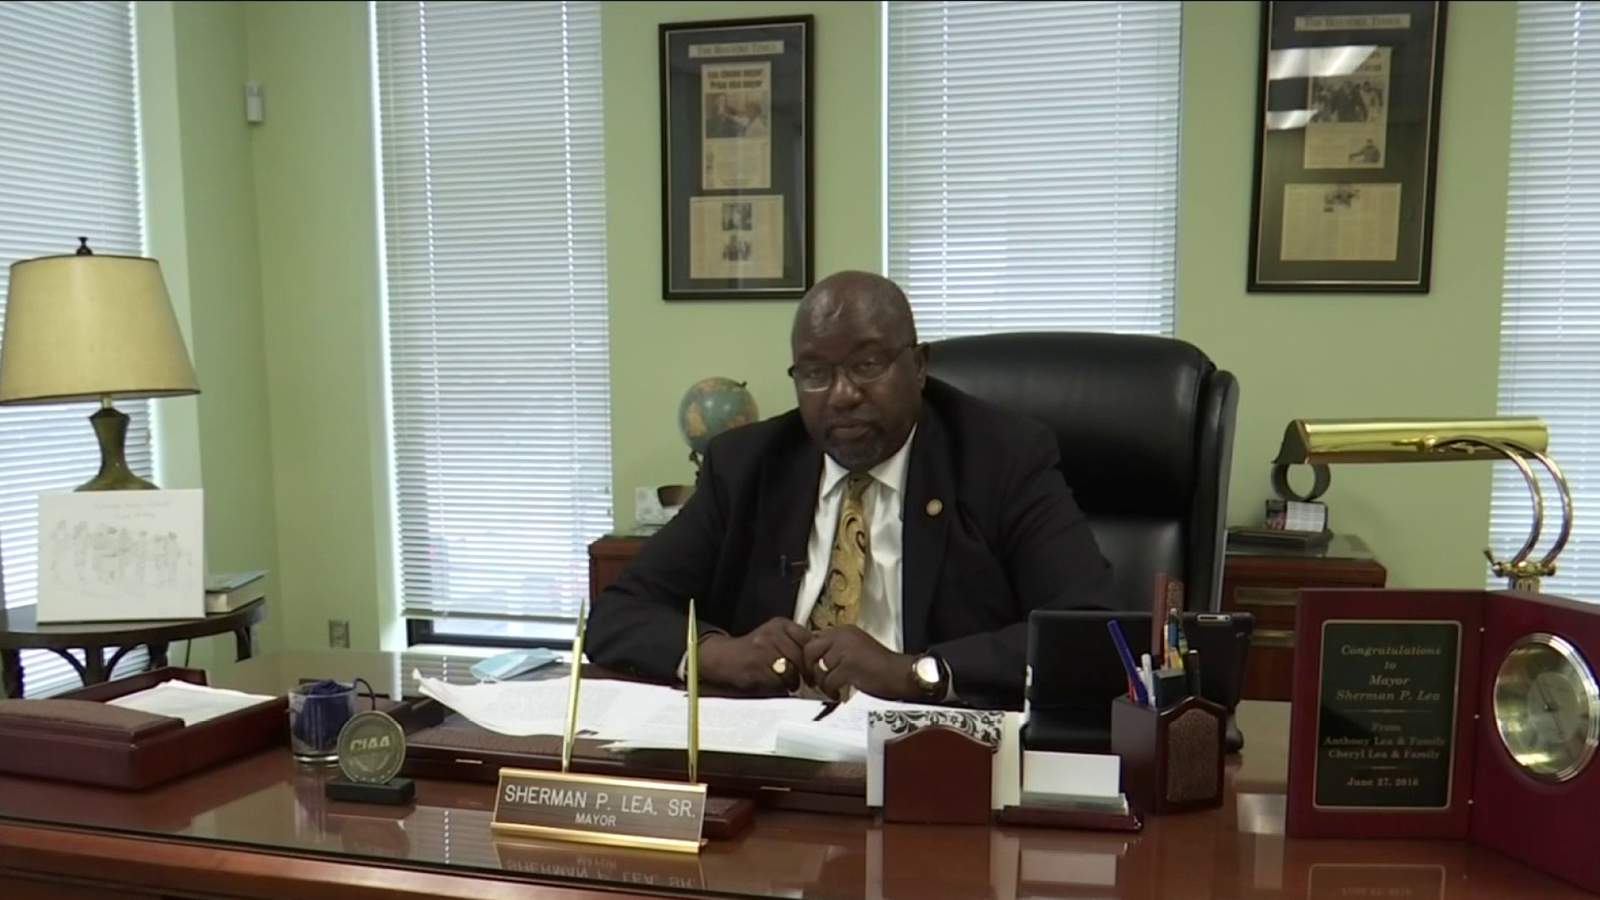 Roanoke Mayor Sherman Lea pushing economic development as part of re-election bid